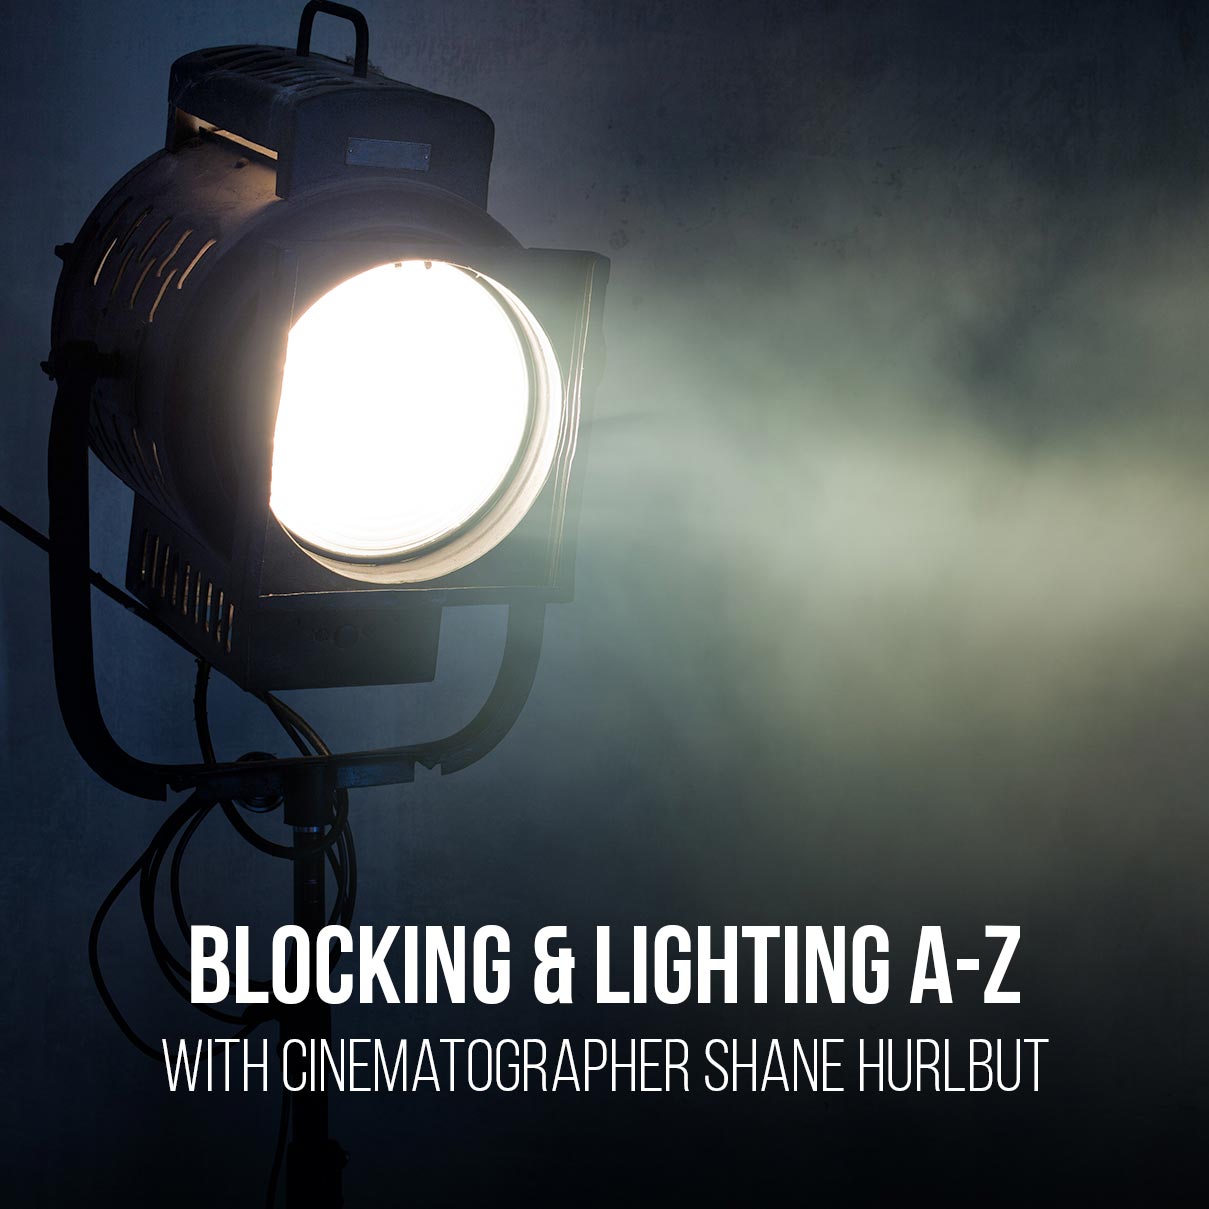 Blocking & Lighting Film Tutorial - A-Z " With Shane Hurlbut - PRO EDU Shane Hurlbut PRO EDU